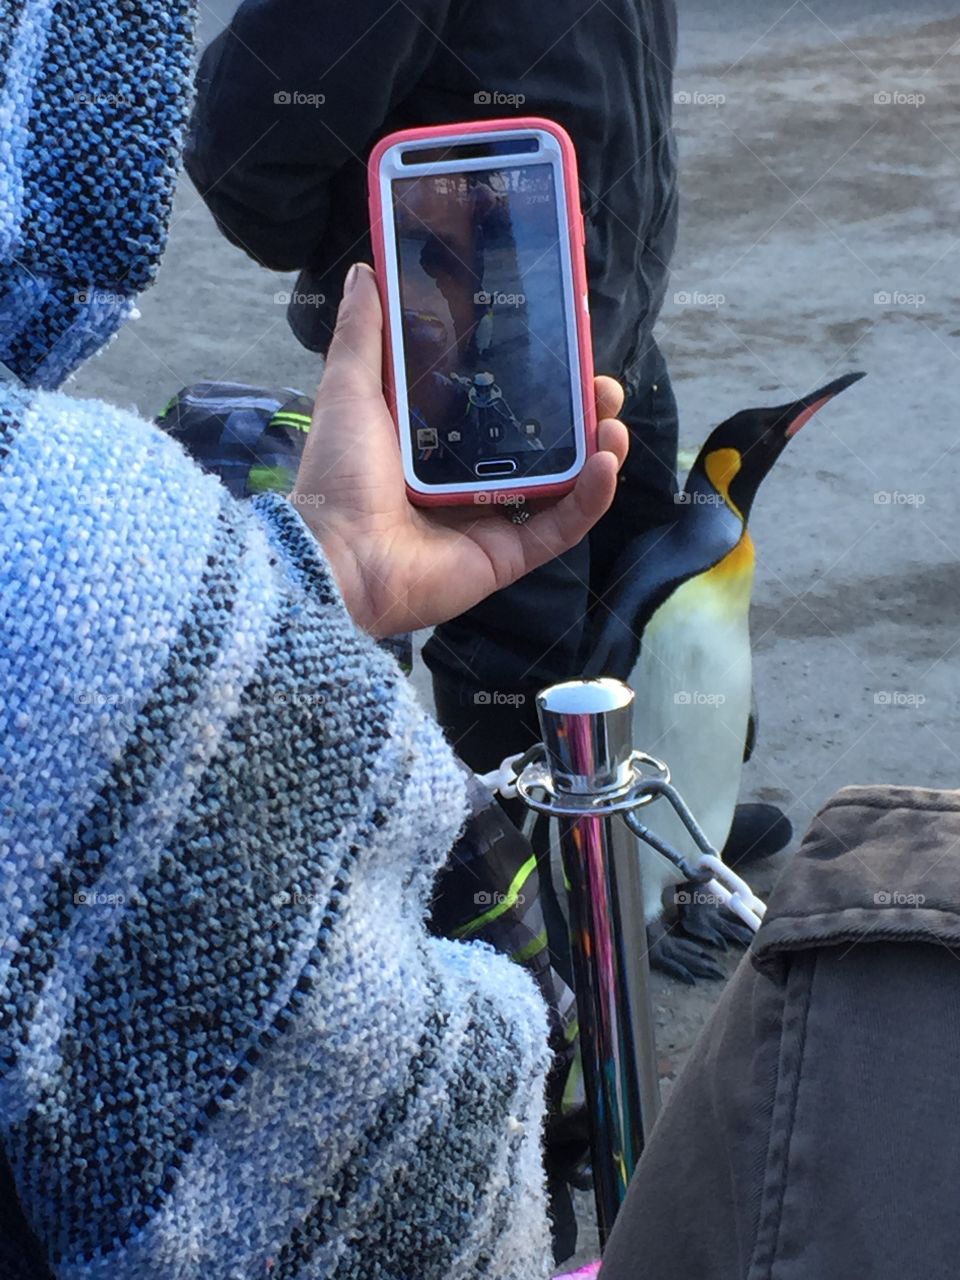 Penguin march in Calgary 